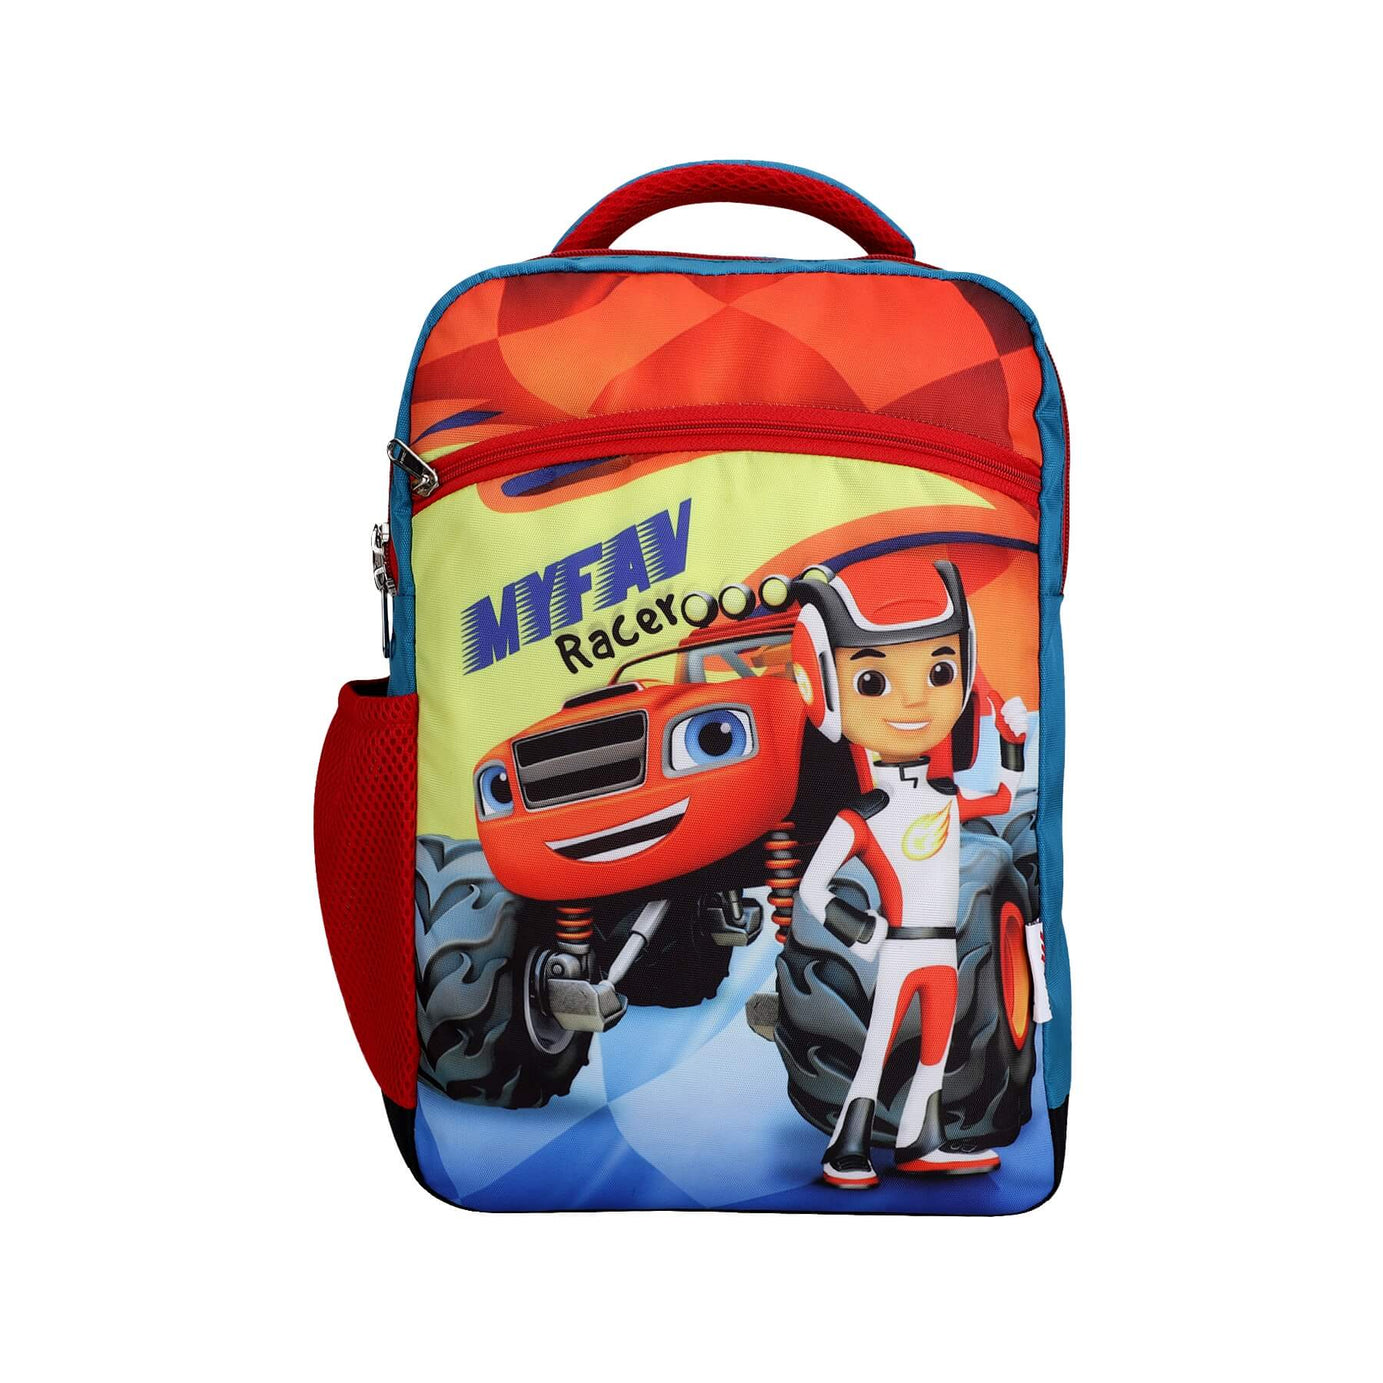 My Fav Cute Racer Kids School Bag For Girls/Boys, School, Casual, Picnic, Nursery-(2 to 10 year Old Kid)